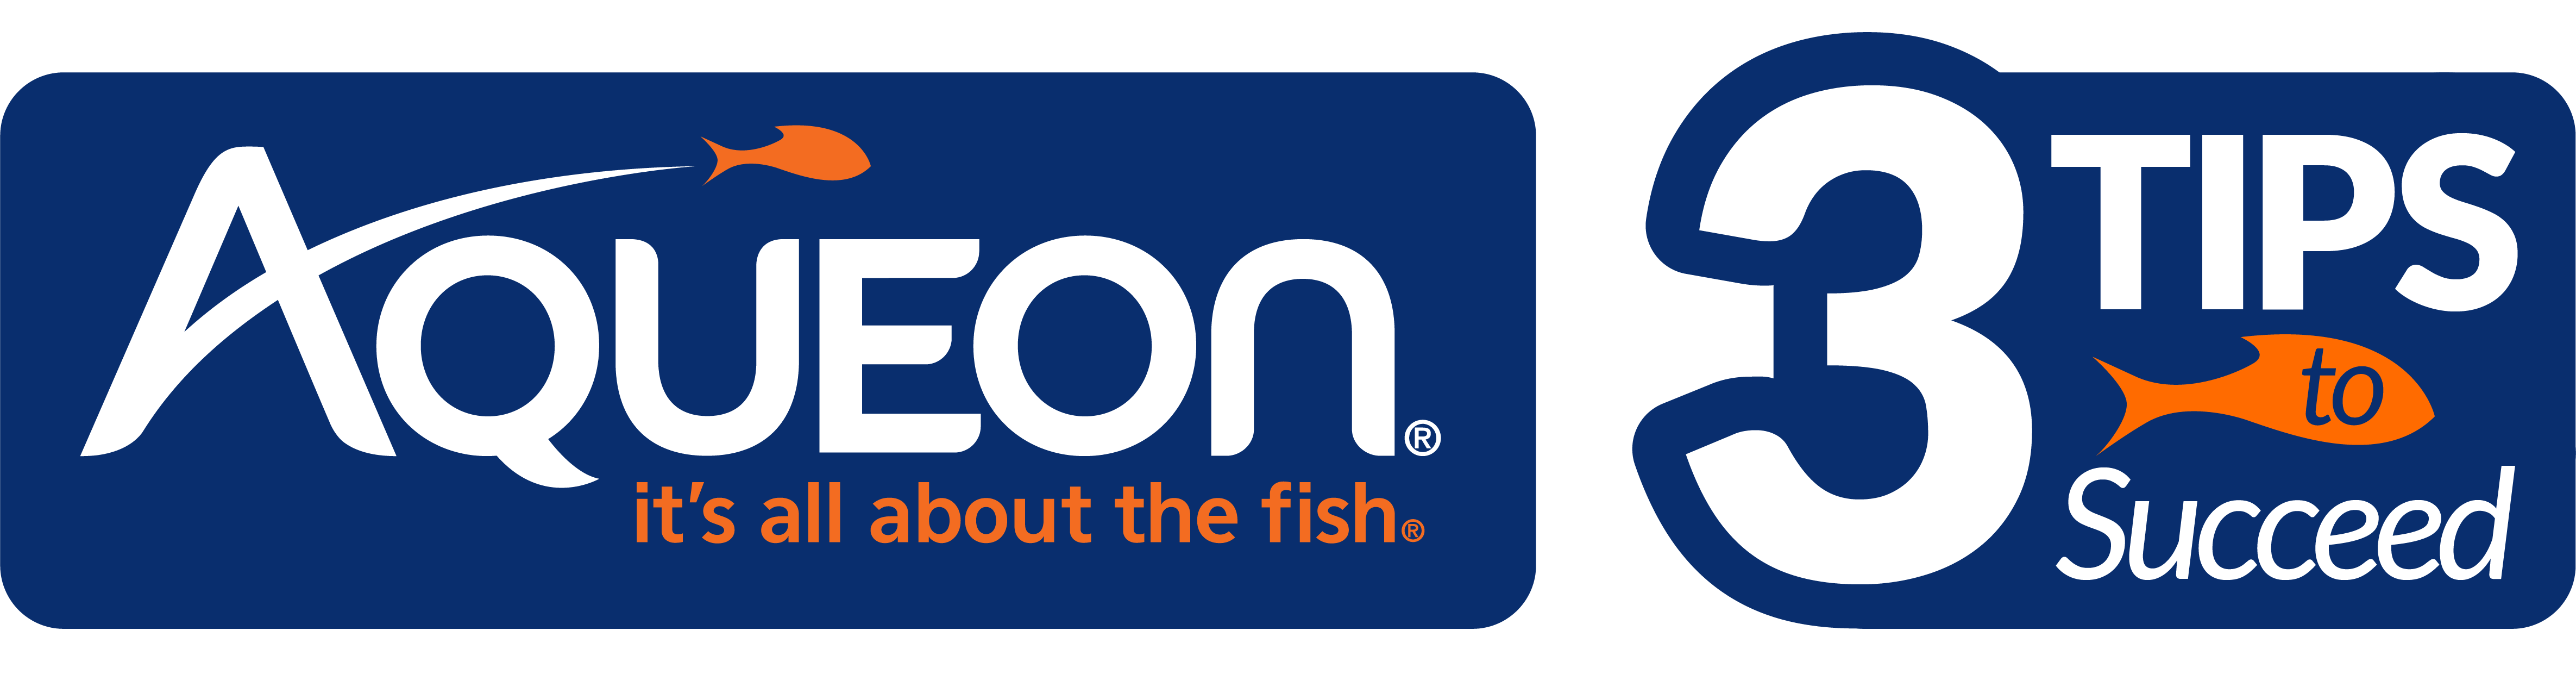 Aqueon Logo - Retail Resource Center | Aqueon Aquarium Products